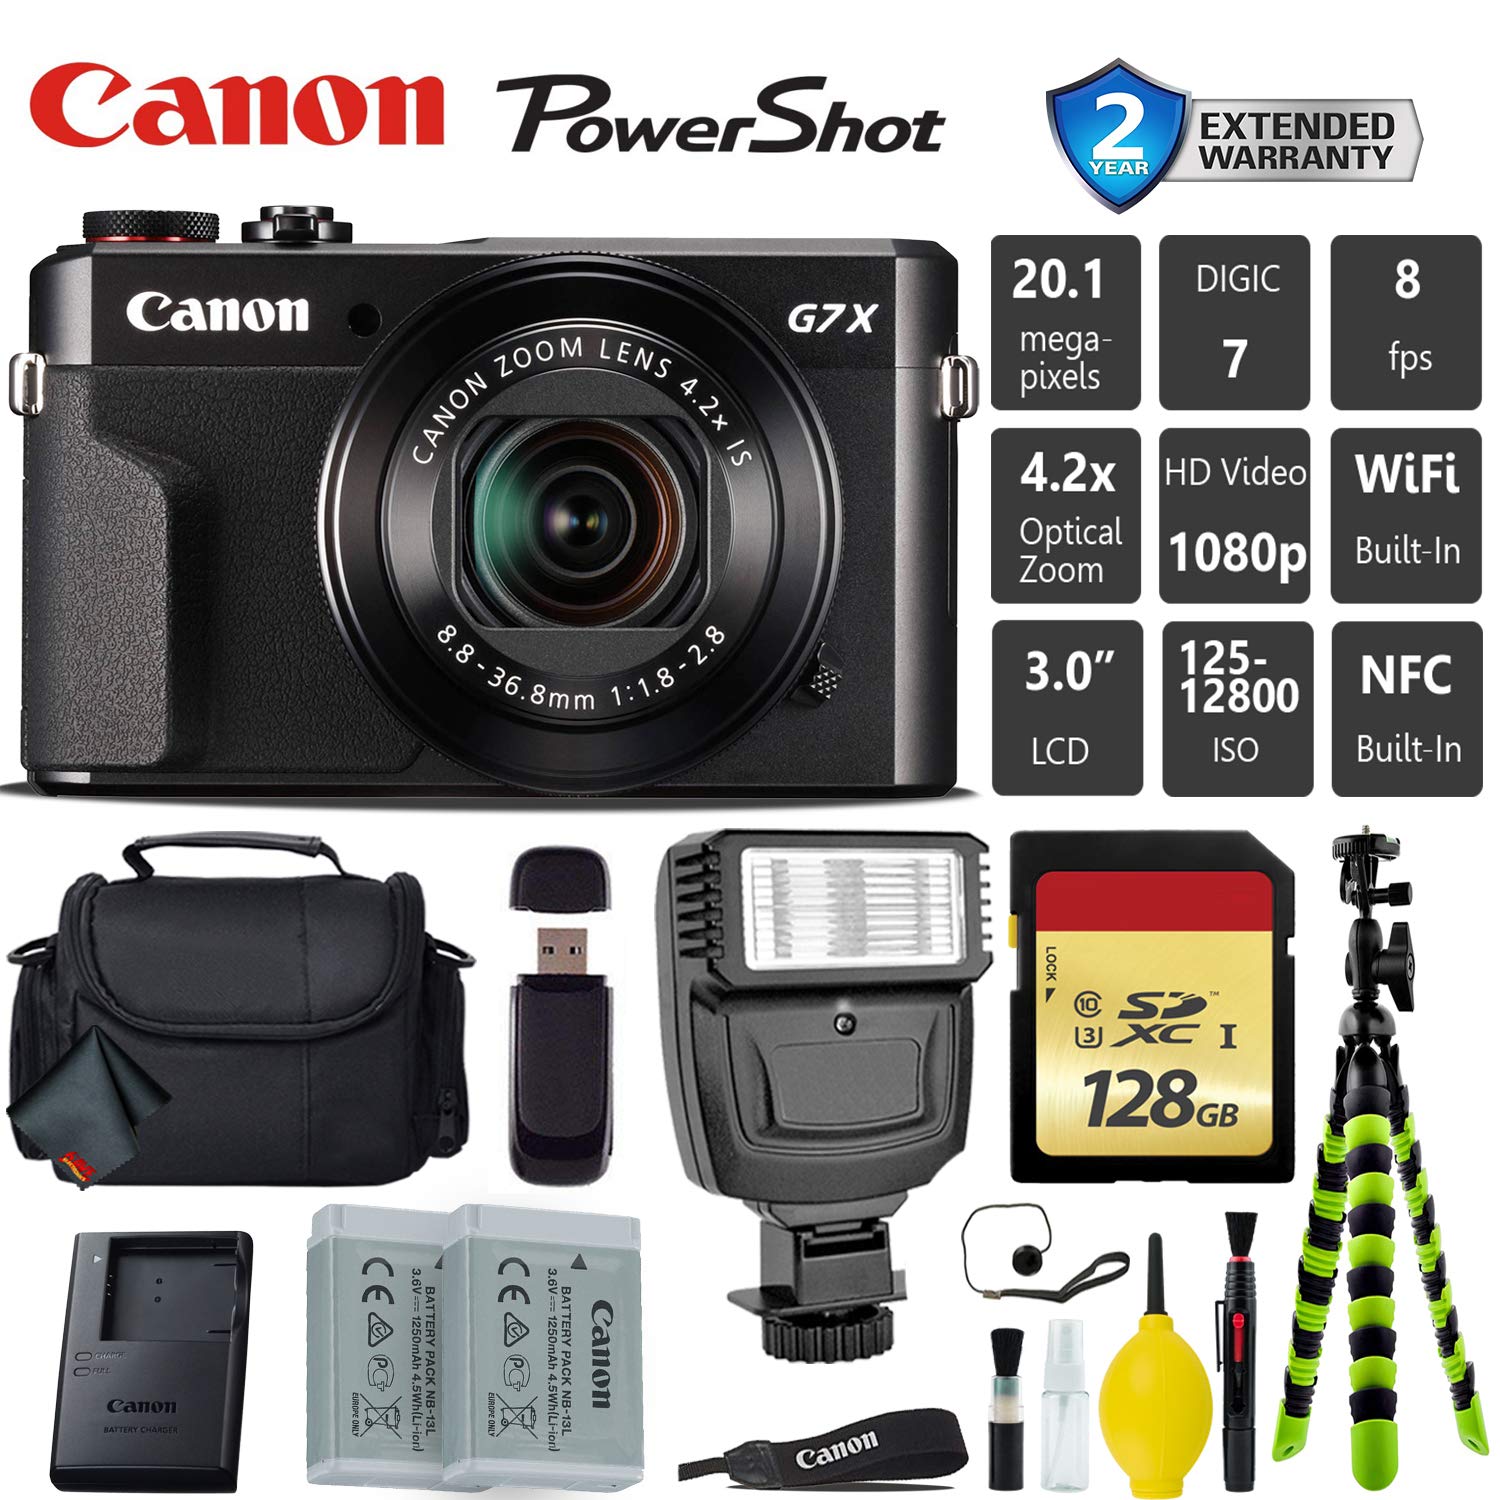 Canon PowerShot G7 X Mark II Point and Shoot Digital Camera + Extra Battery + Digital Flash + Camera Case + 128GB Class Card Pro Bundle